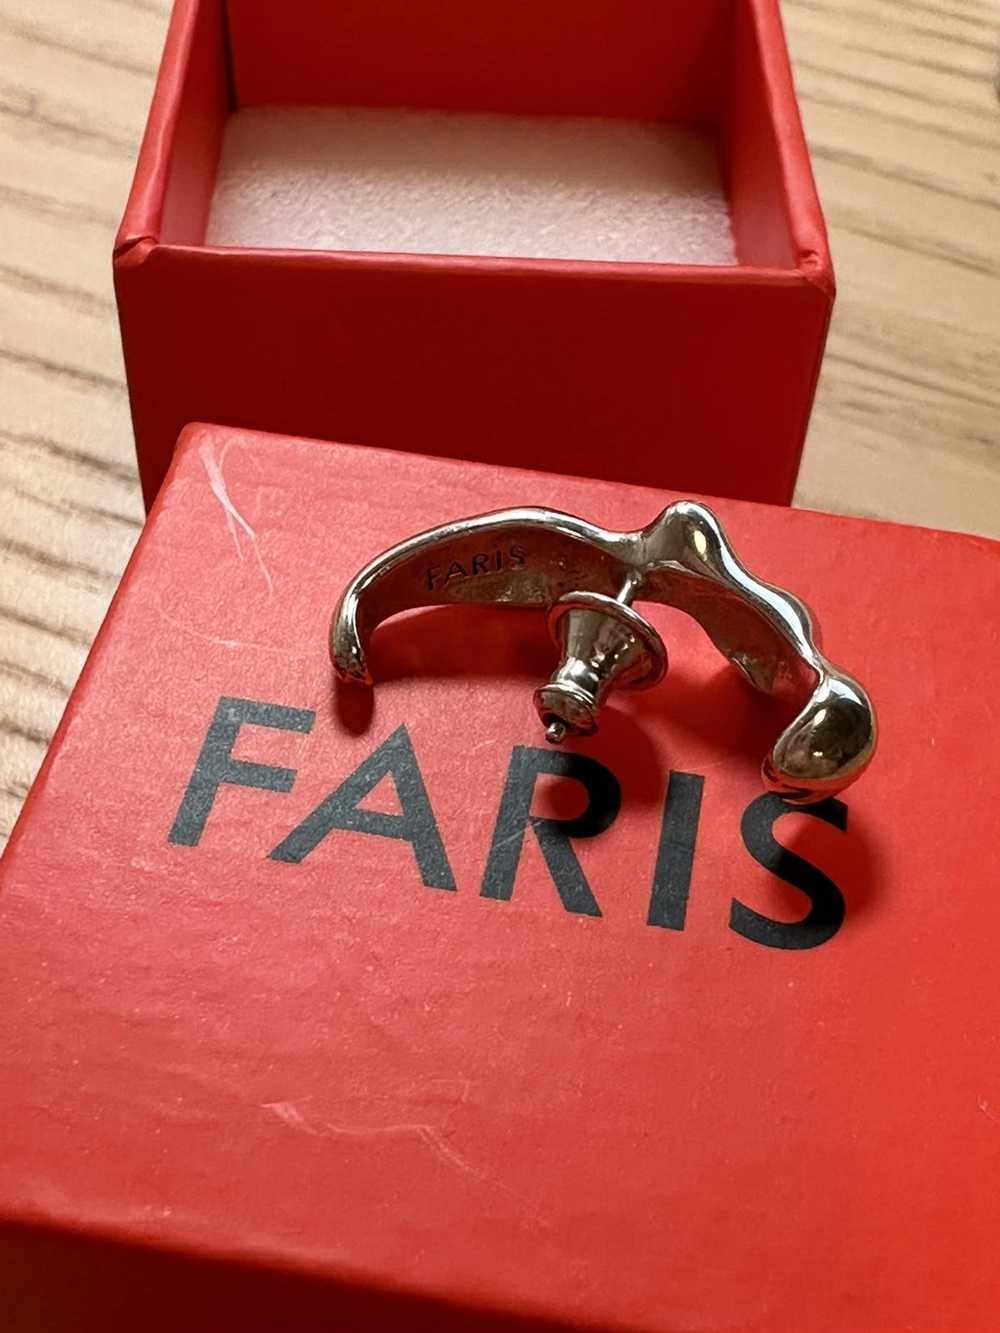 FARIS Faris silver seep single earring - image 3